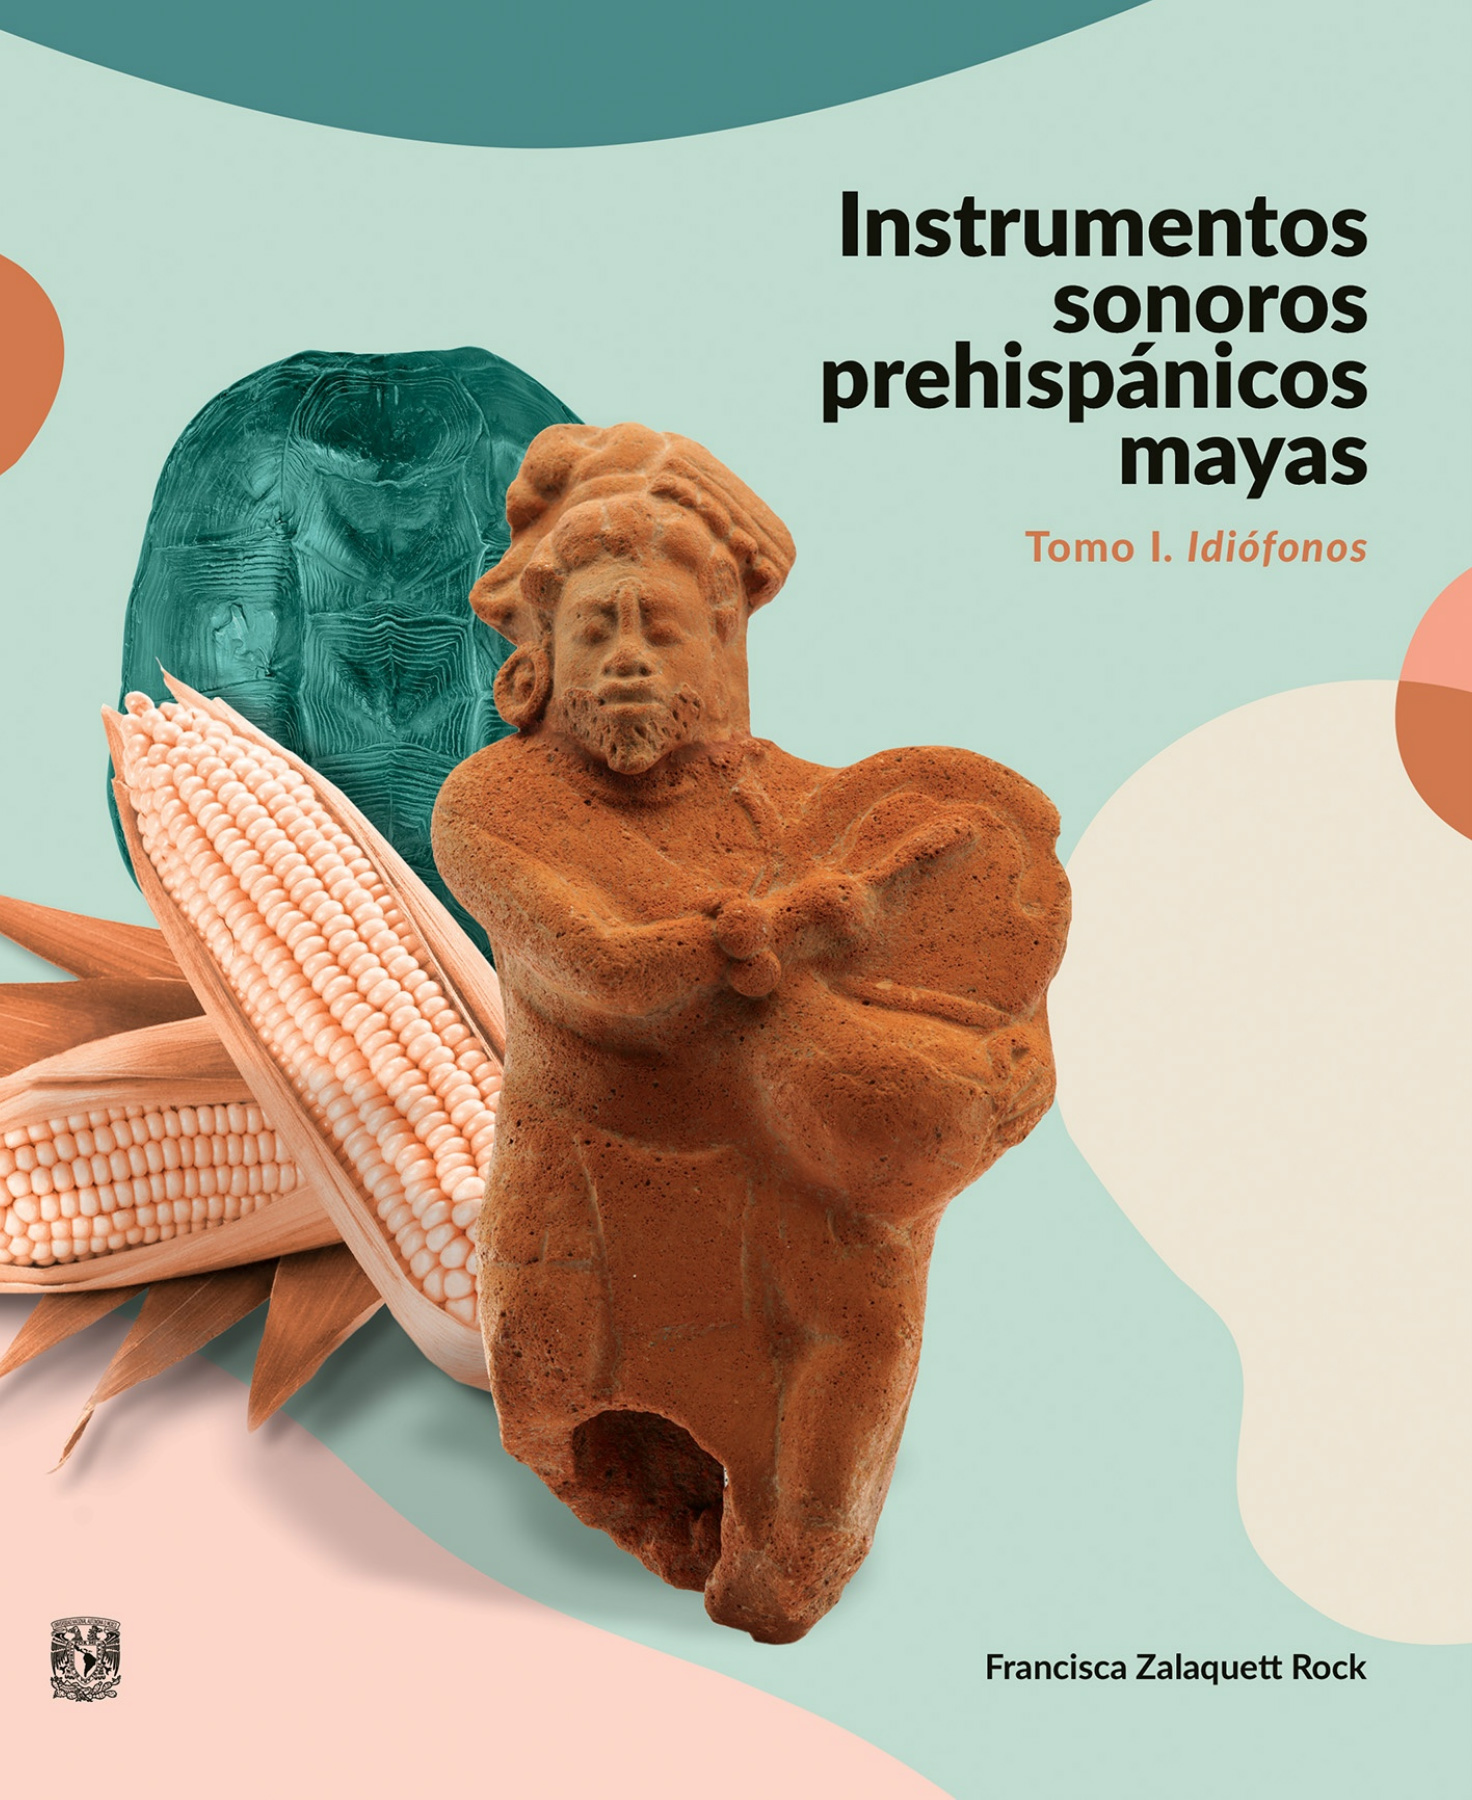 Instrumentos sonoros prehispánicos mayas. Tomo I. Idiofonos